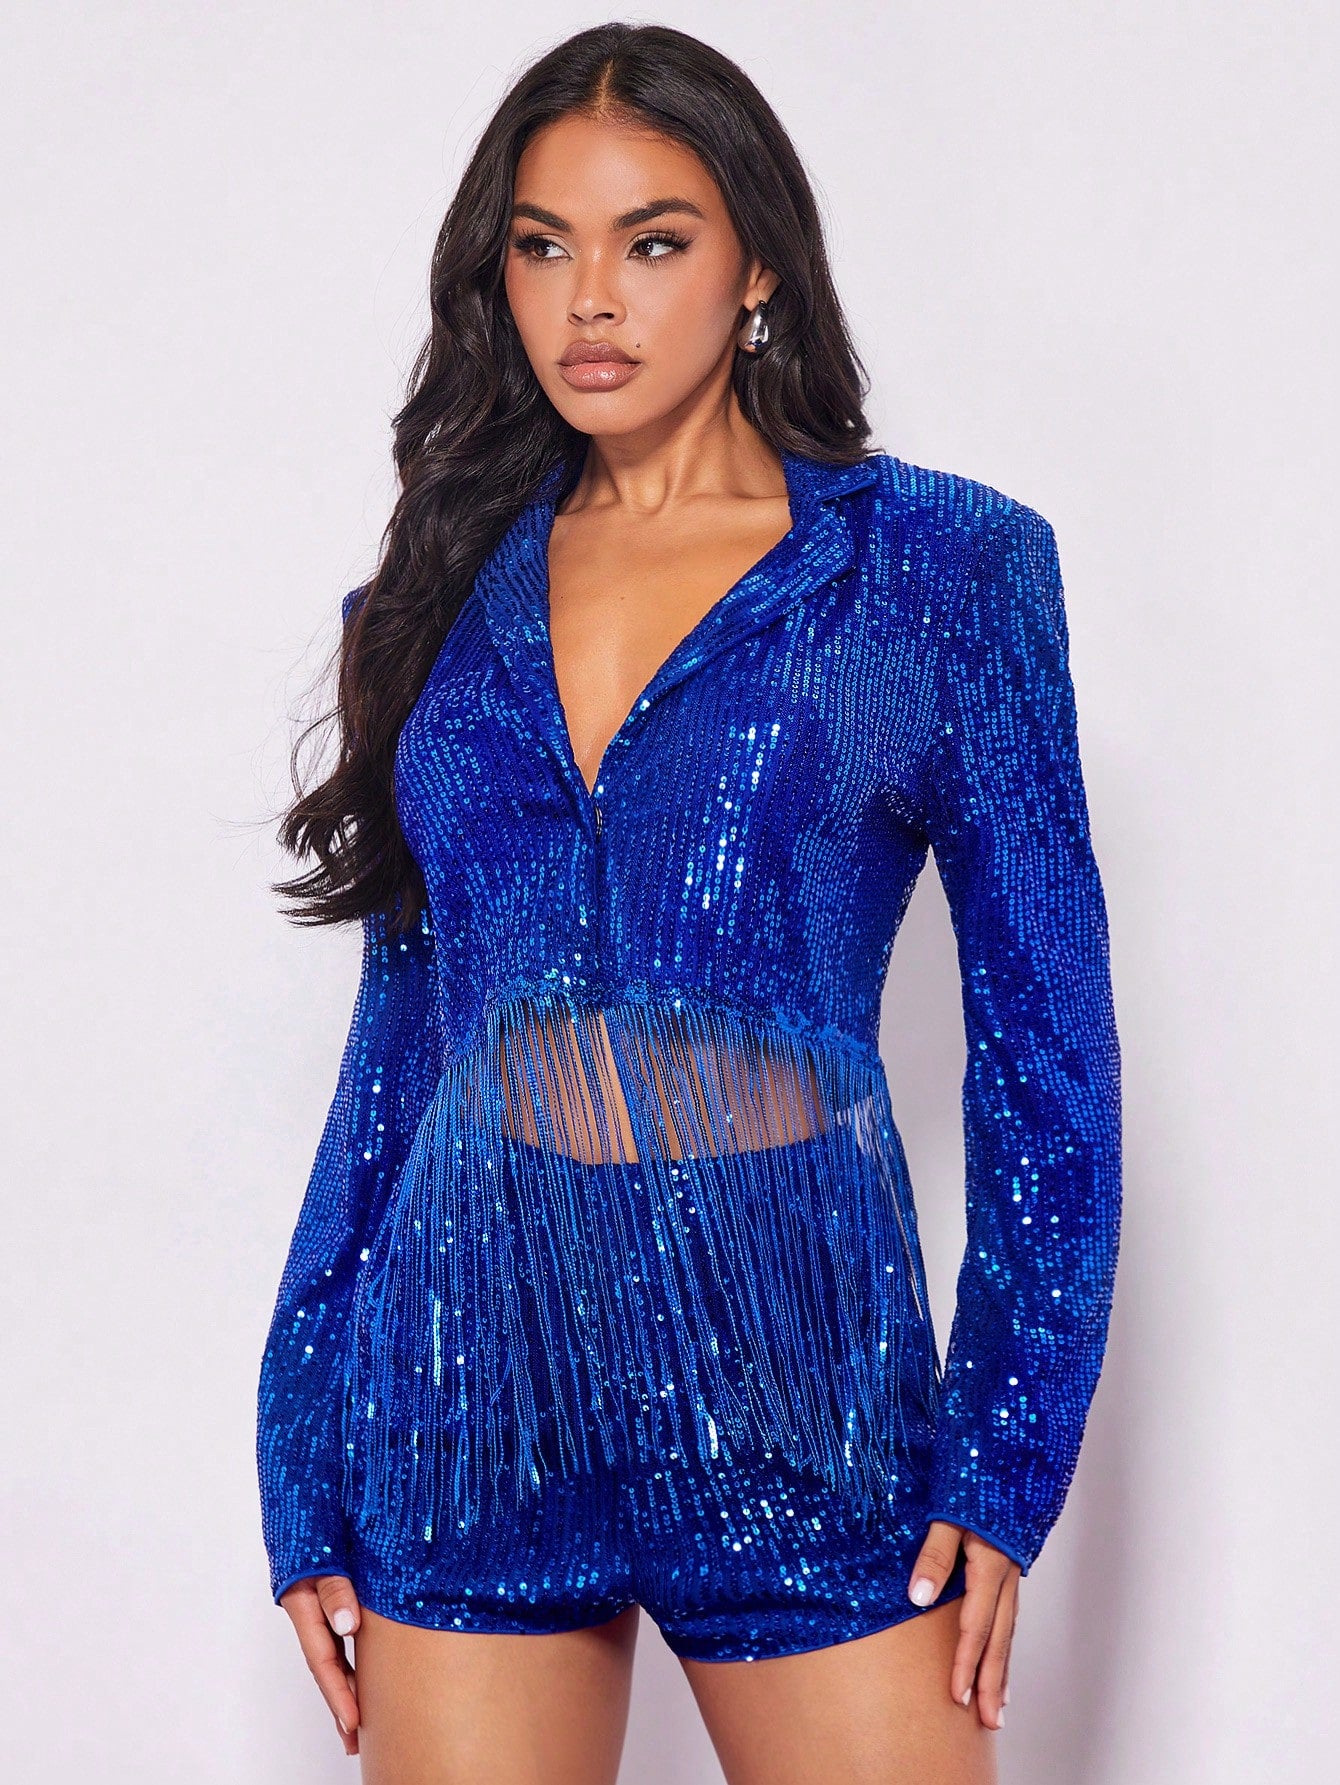 beautiful model posing on a white background wearing a Blue sequin jacket fancy dress